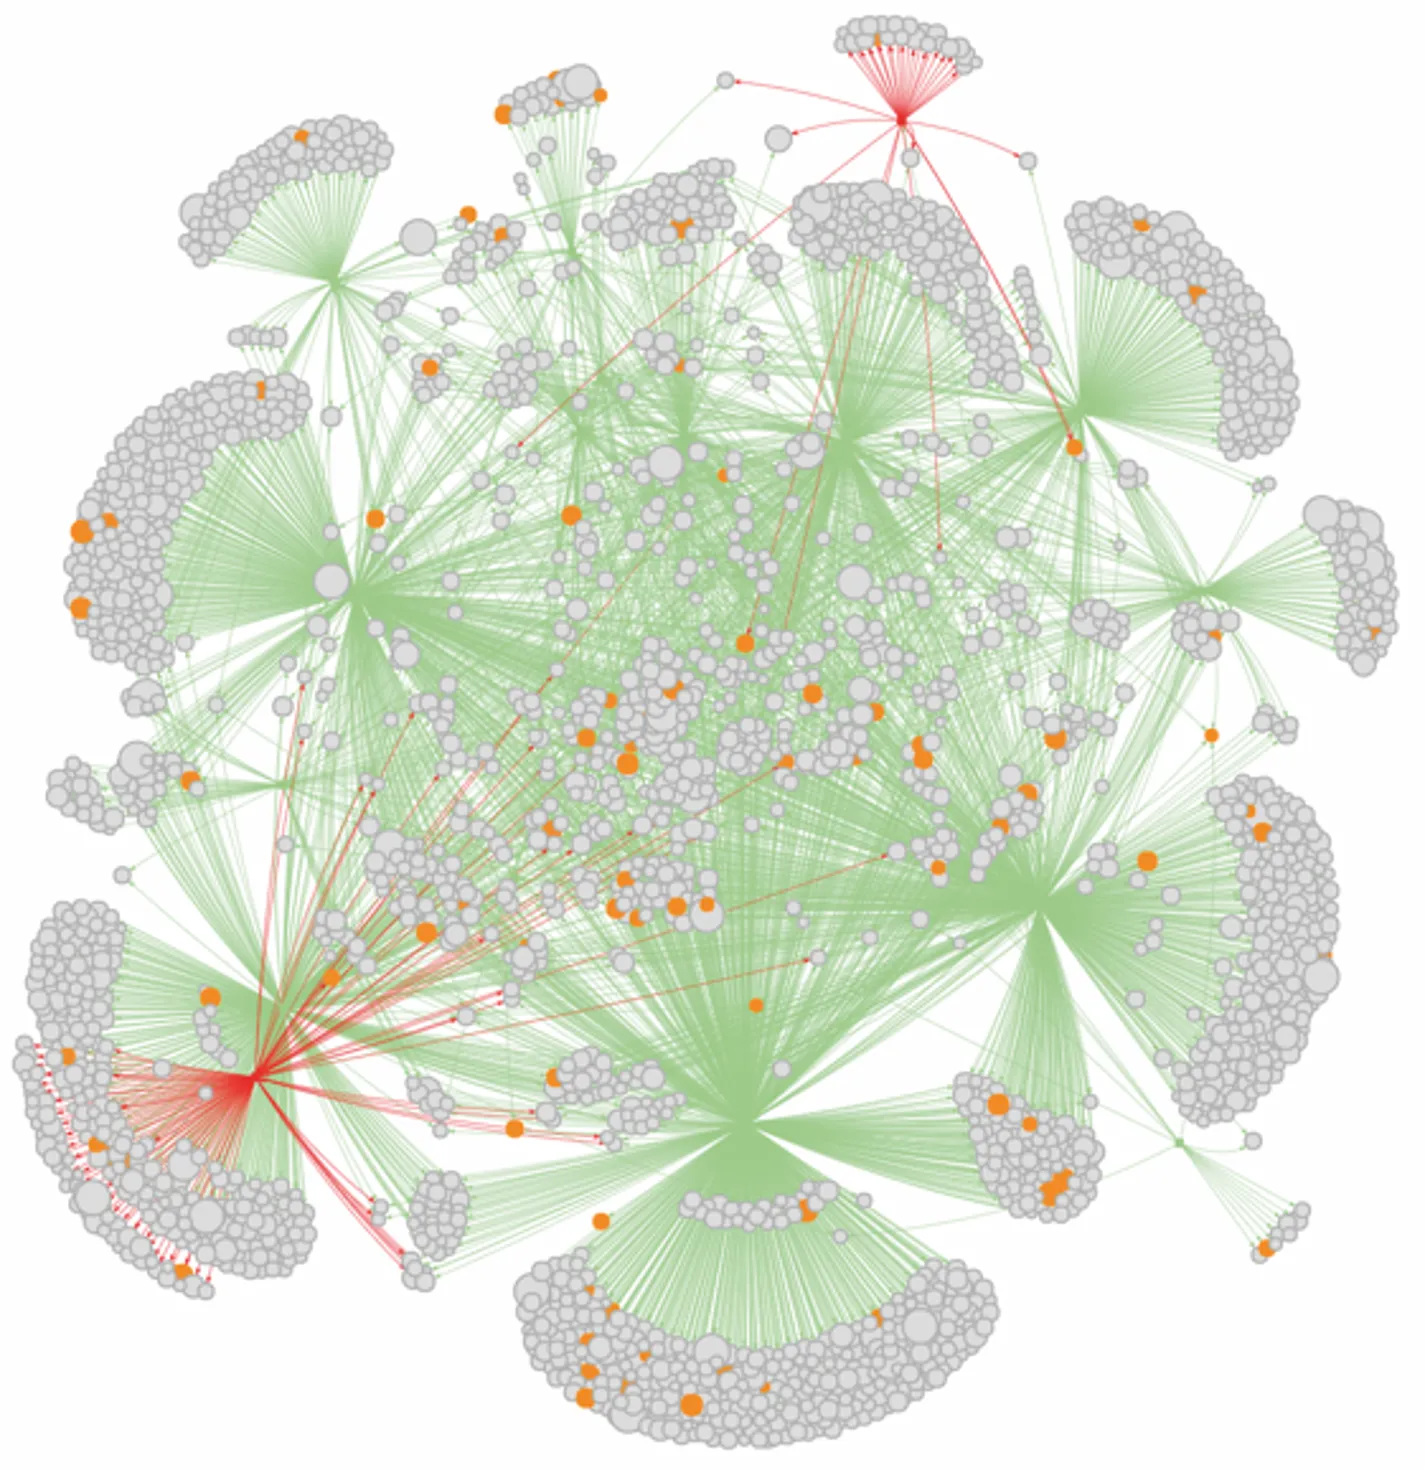 gene-regulatory-networks